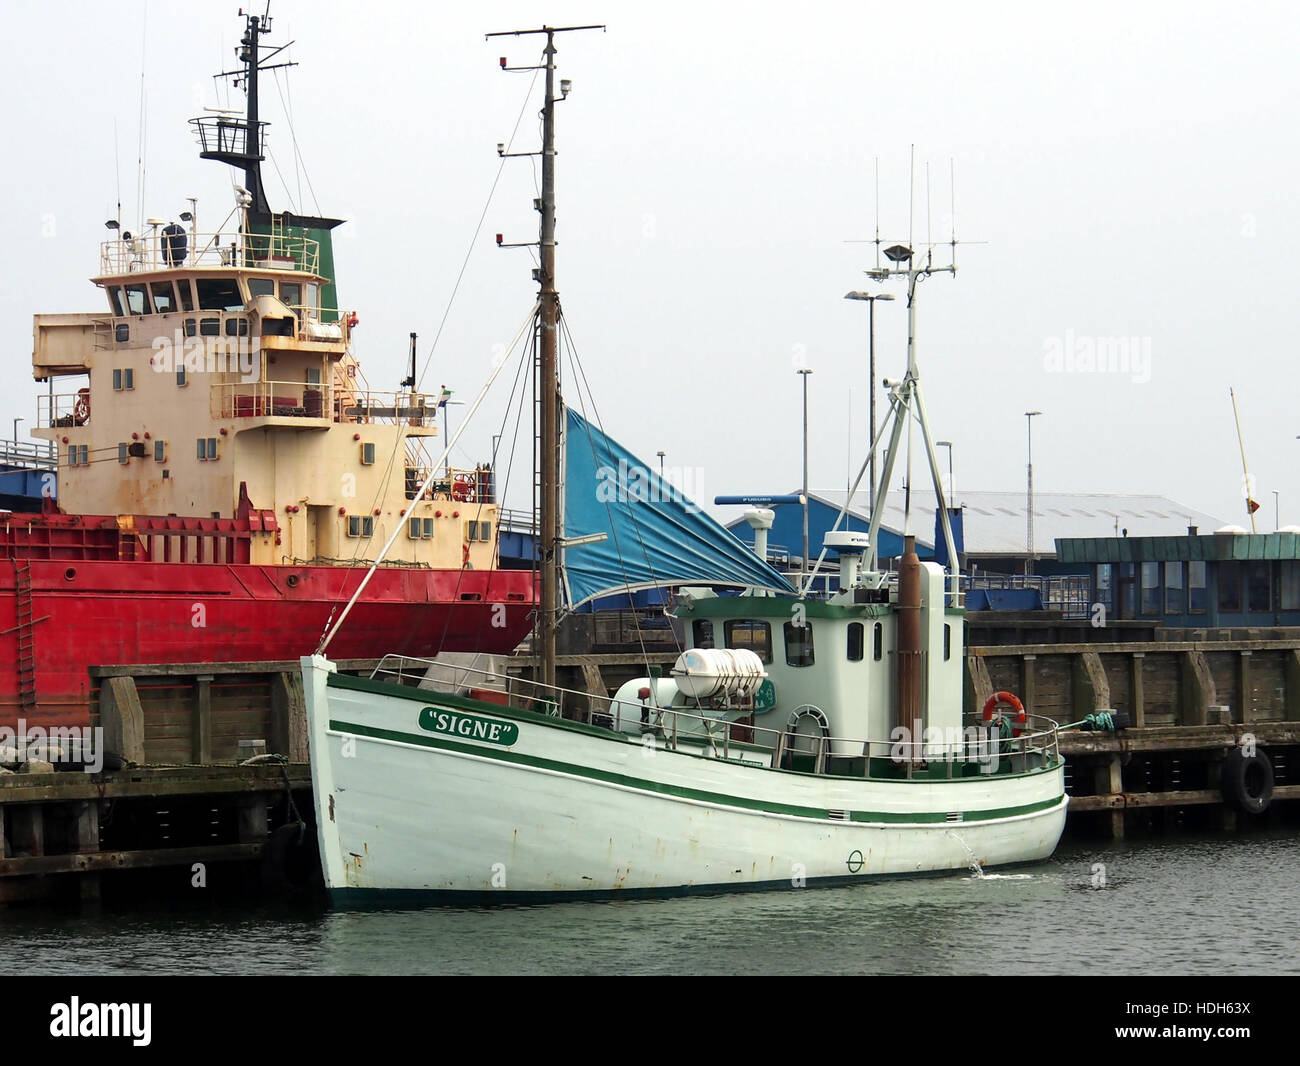 Signe, fishing vessel at Greena Stock Photo